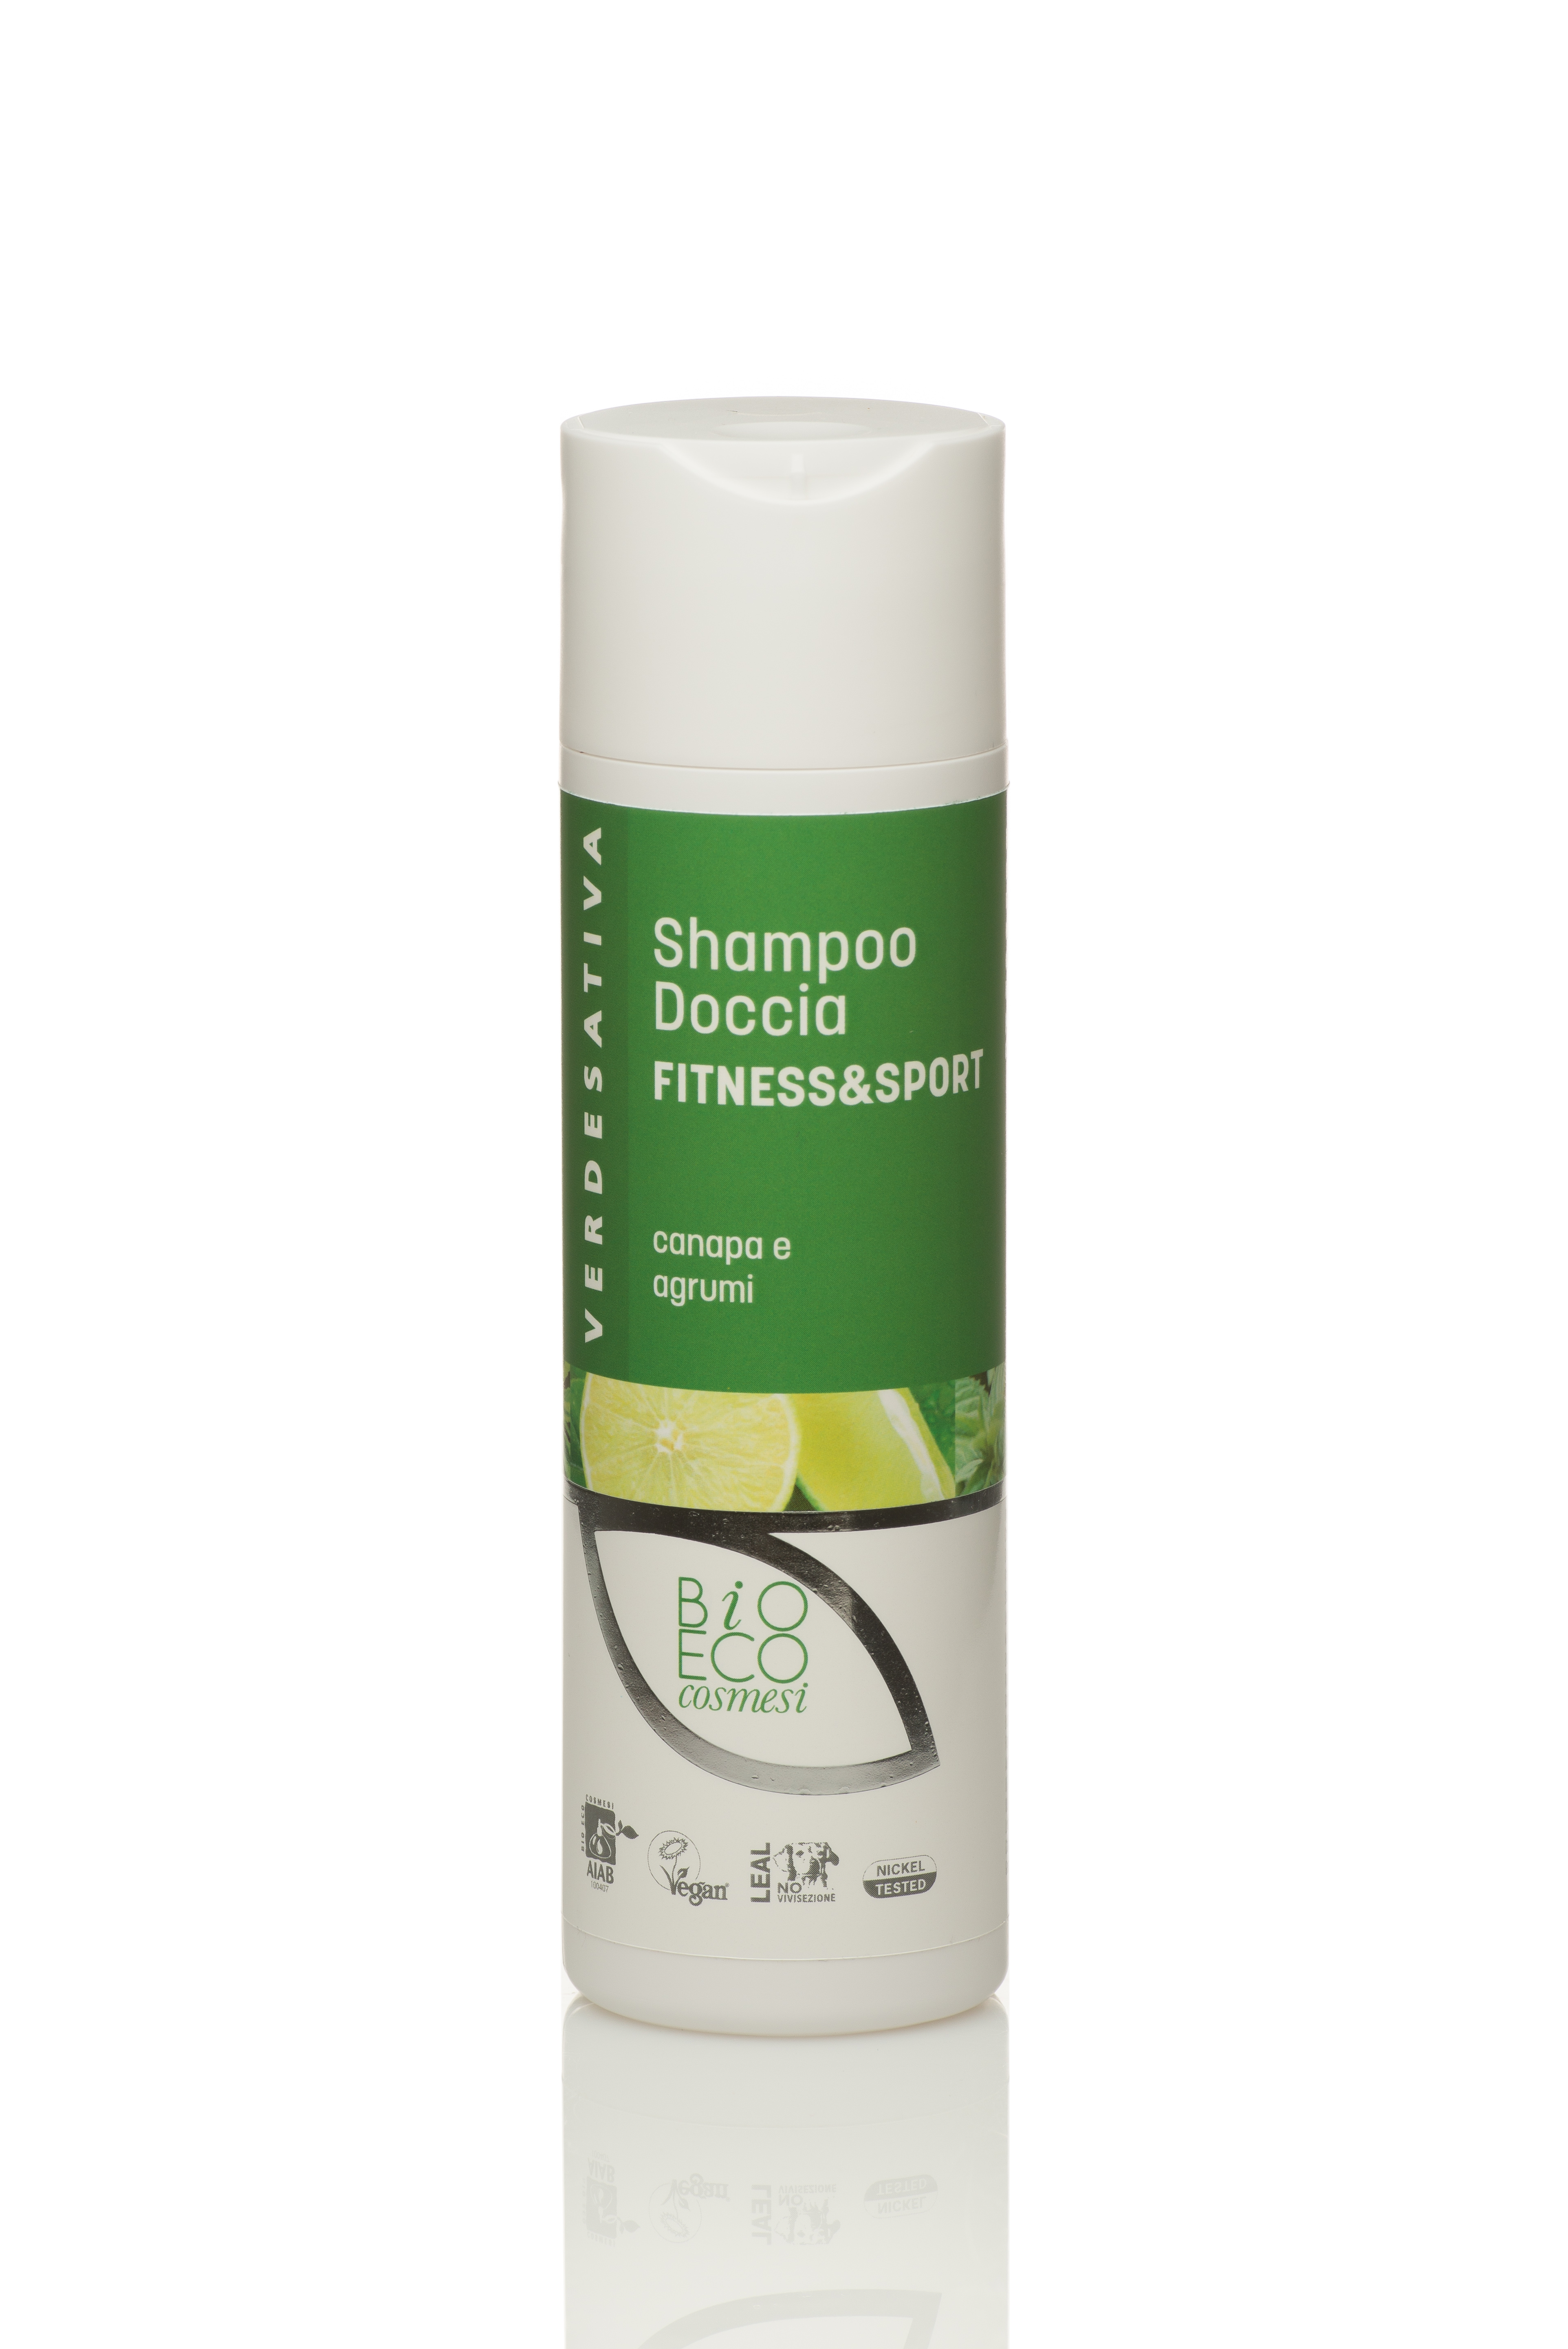 Shampoo Doccia Fitness & Sport 100% naturale e bio degradabile 200ml